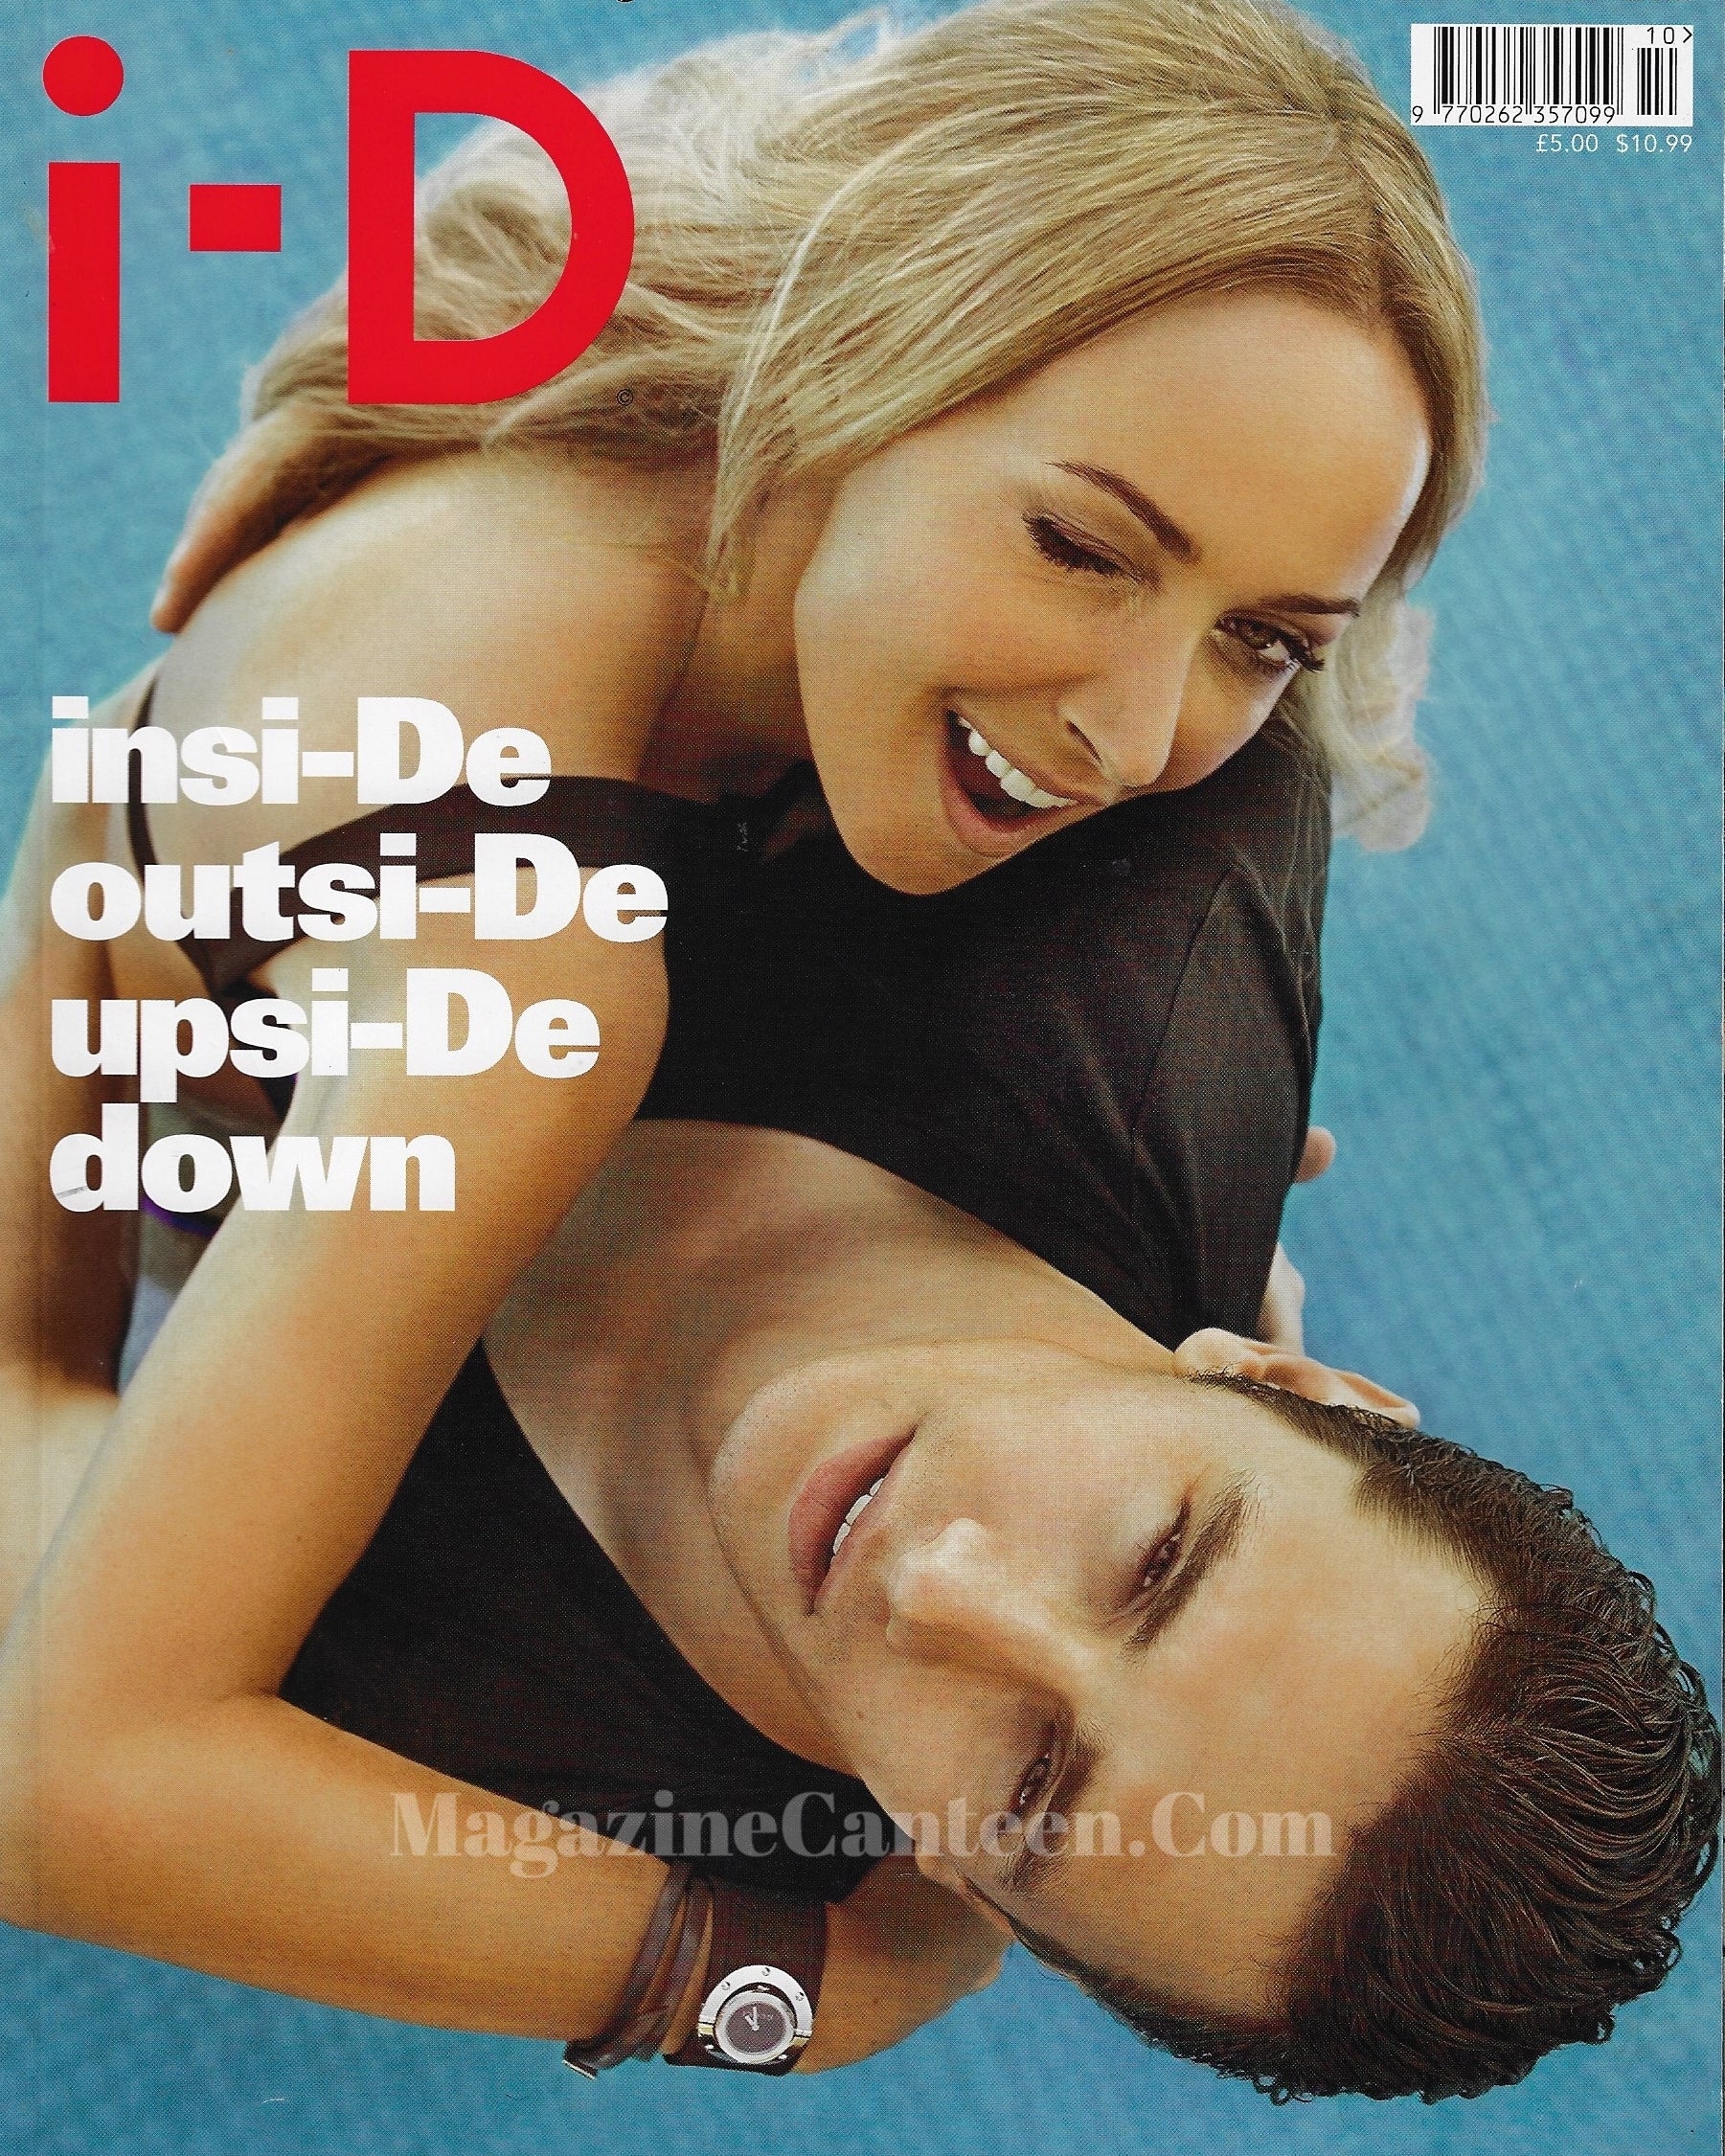 I-D Magazine 303 - James Franco & Frida Giannini